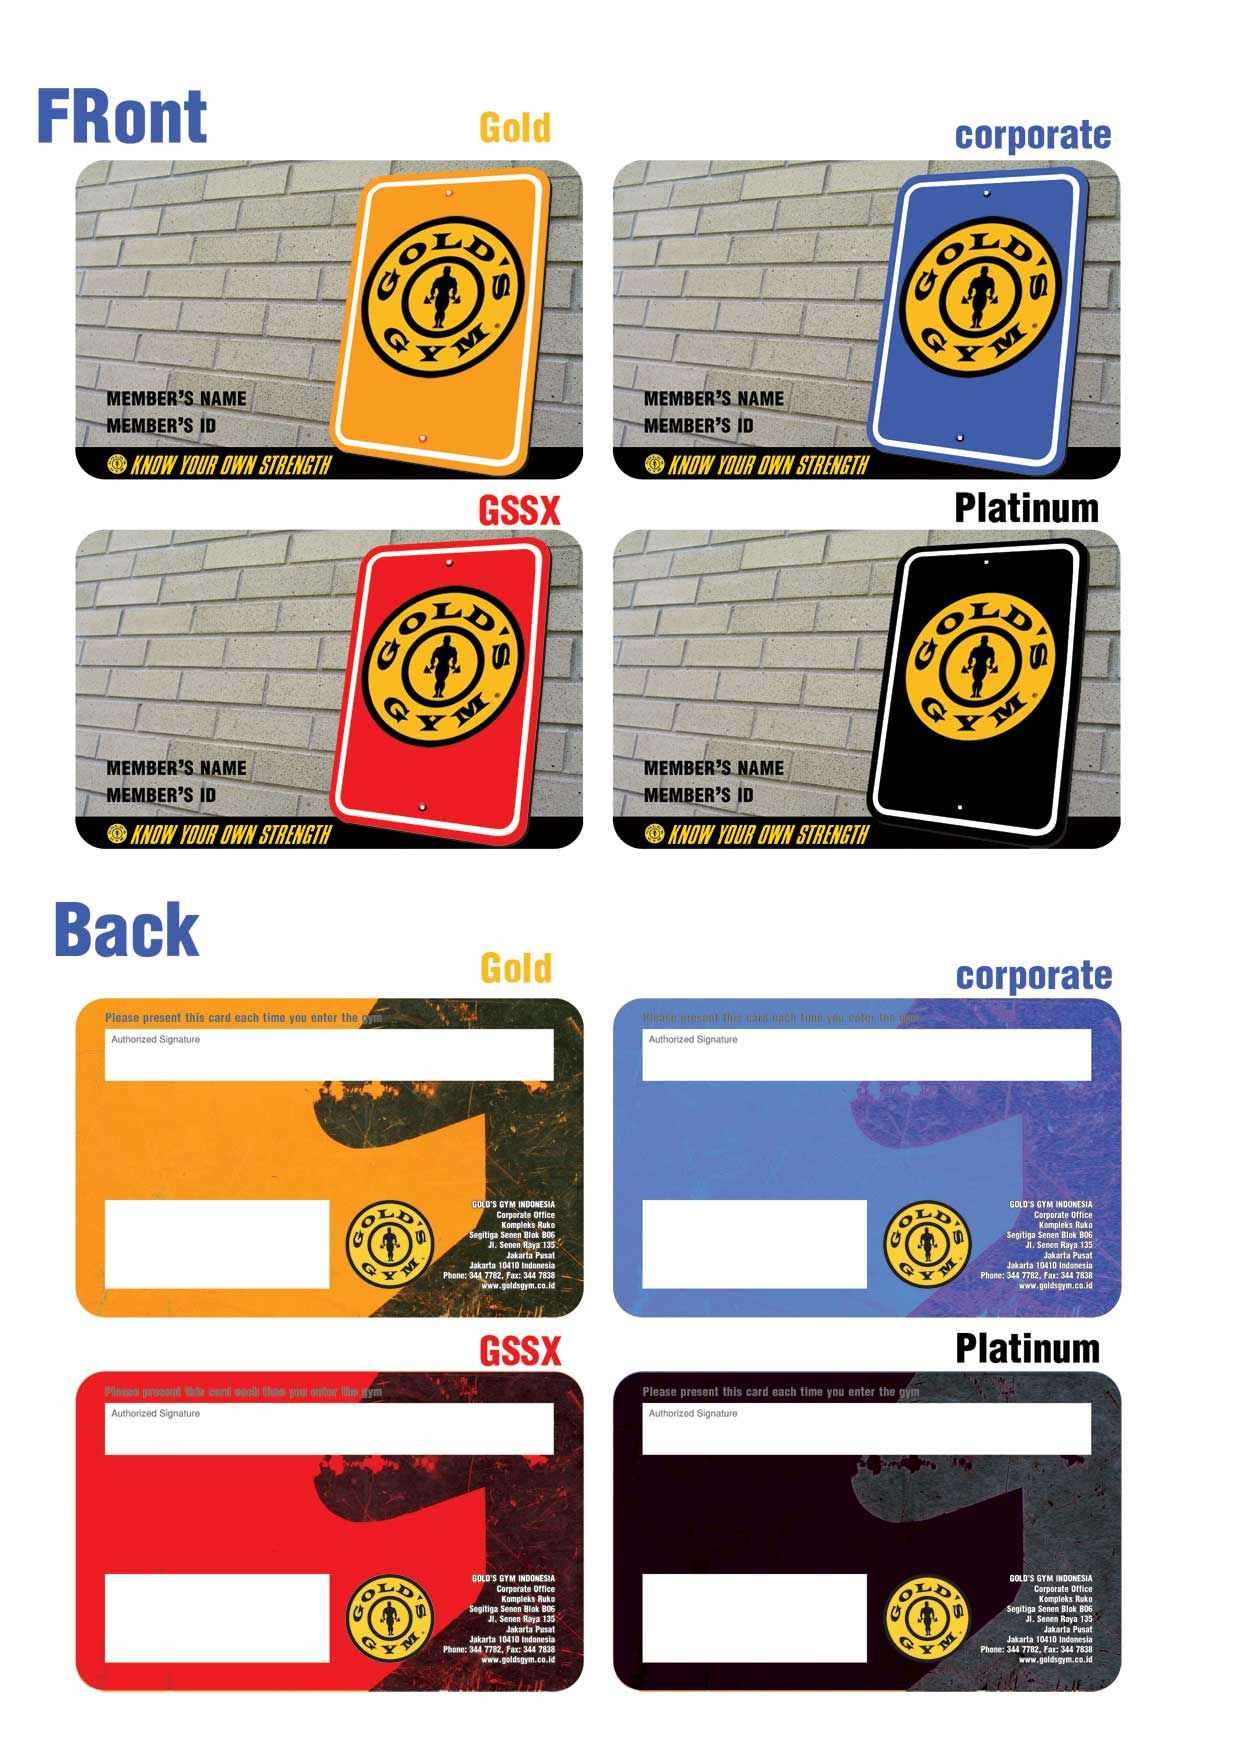 Gold Gym Membership Card | G I F T S Inside Gym Membership Card Template